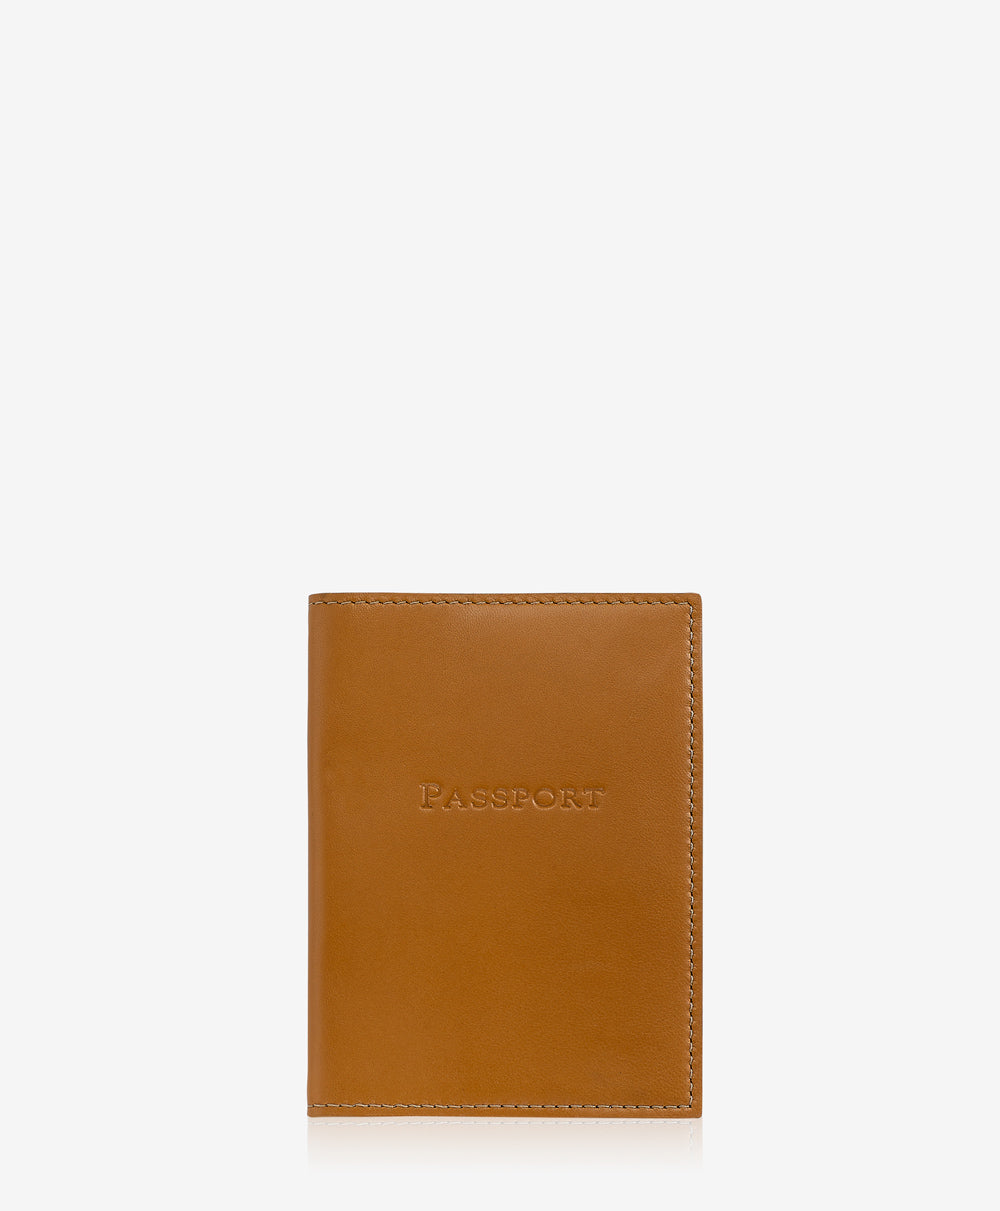 GiGi New York Passport Case British Tan Traditional Leather